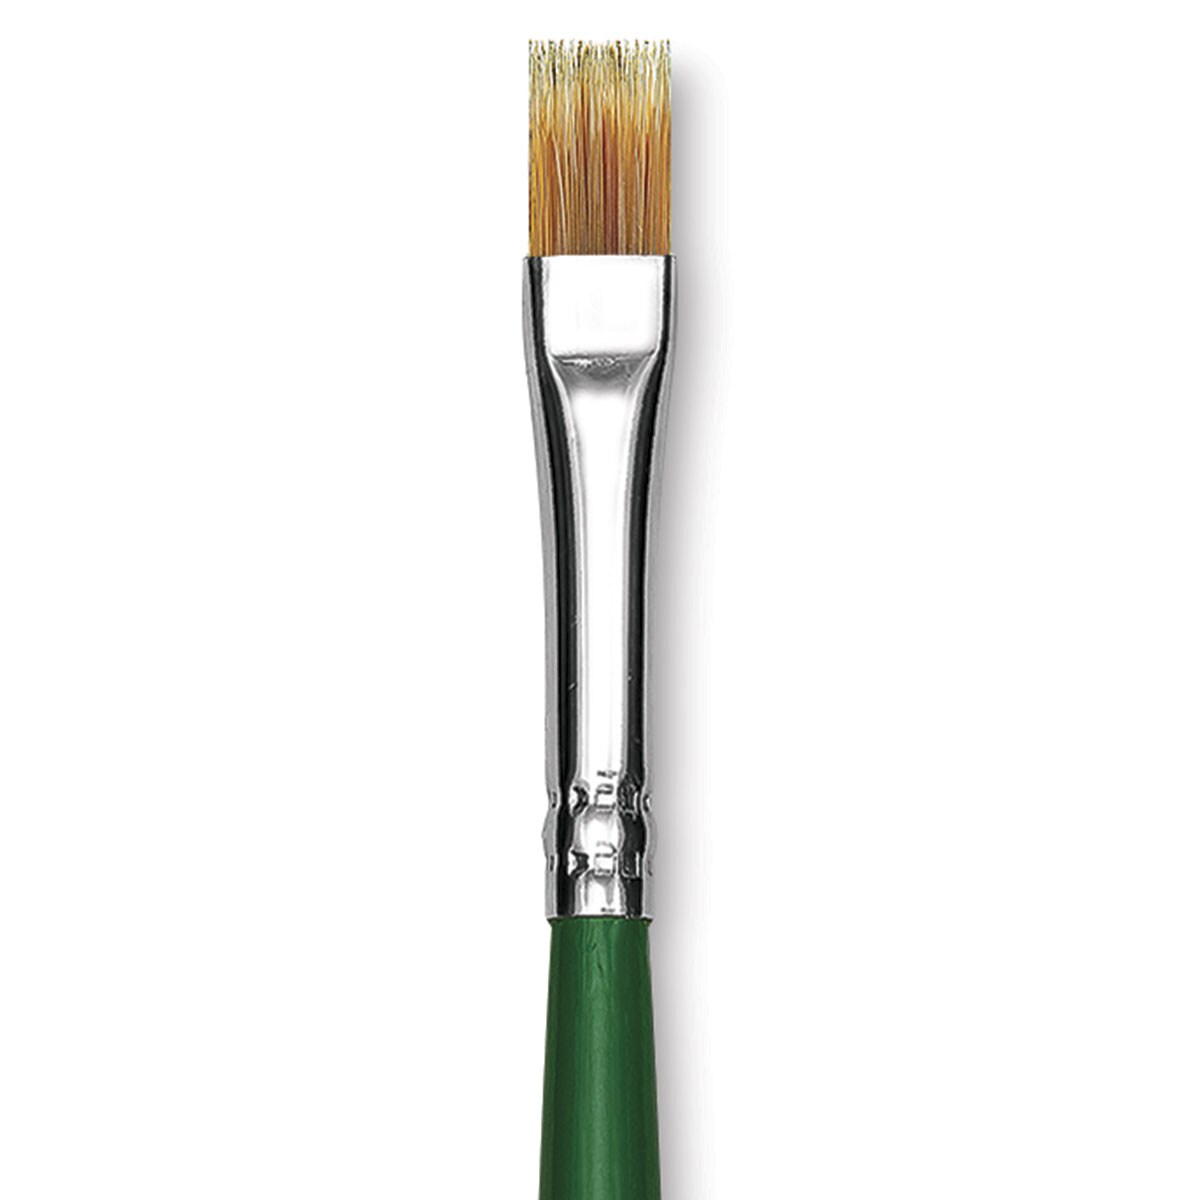 Bright Brushes  BLICK Art Materials